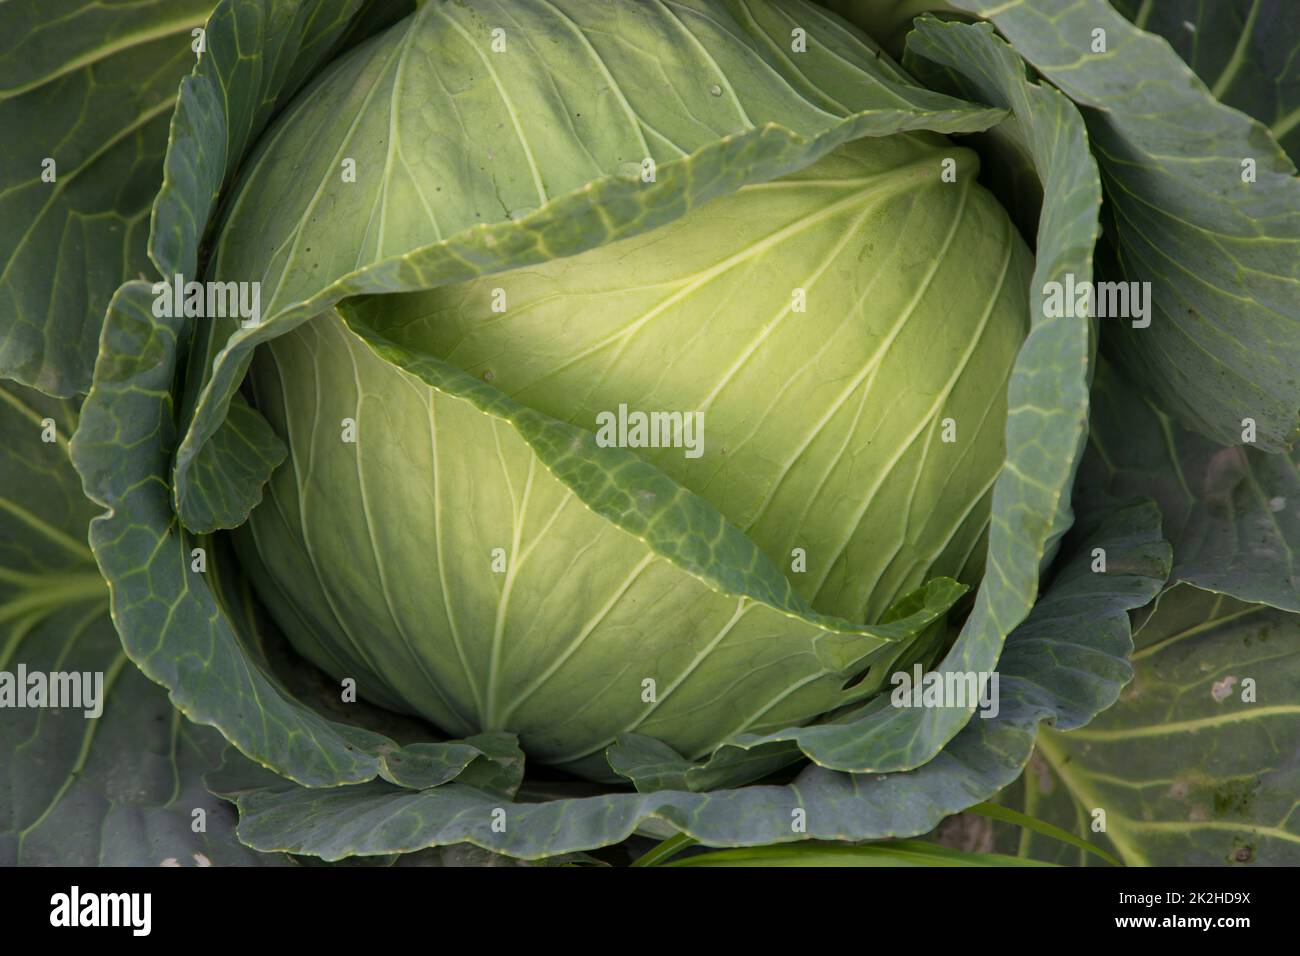 Organic farming of fresh green cabbage plantation Stock Photo